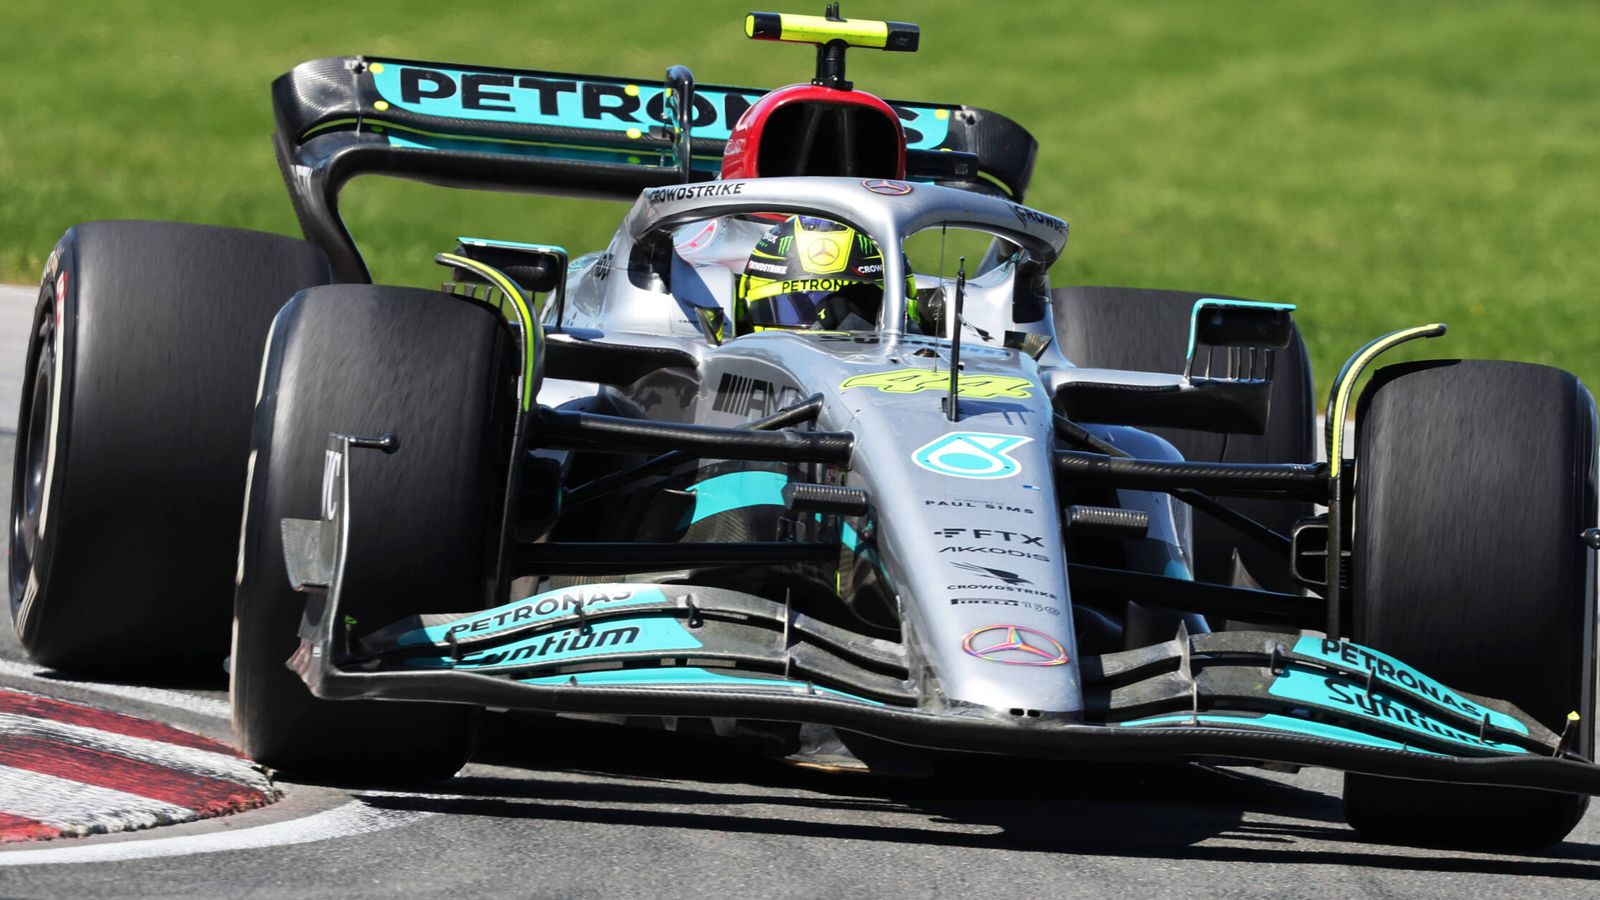 Mercedes plan British GP upgrades but Nico Rosberg predicts team ‘still miles away’ from Red Bull, Ferrari